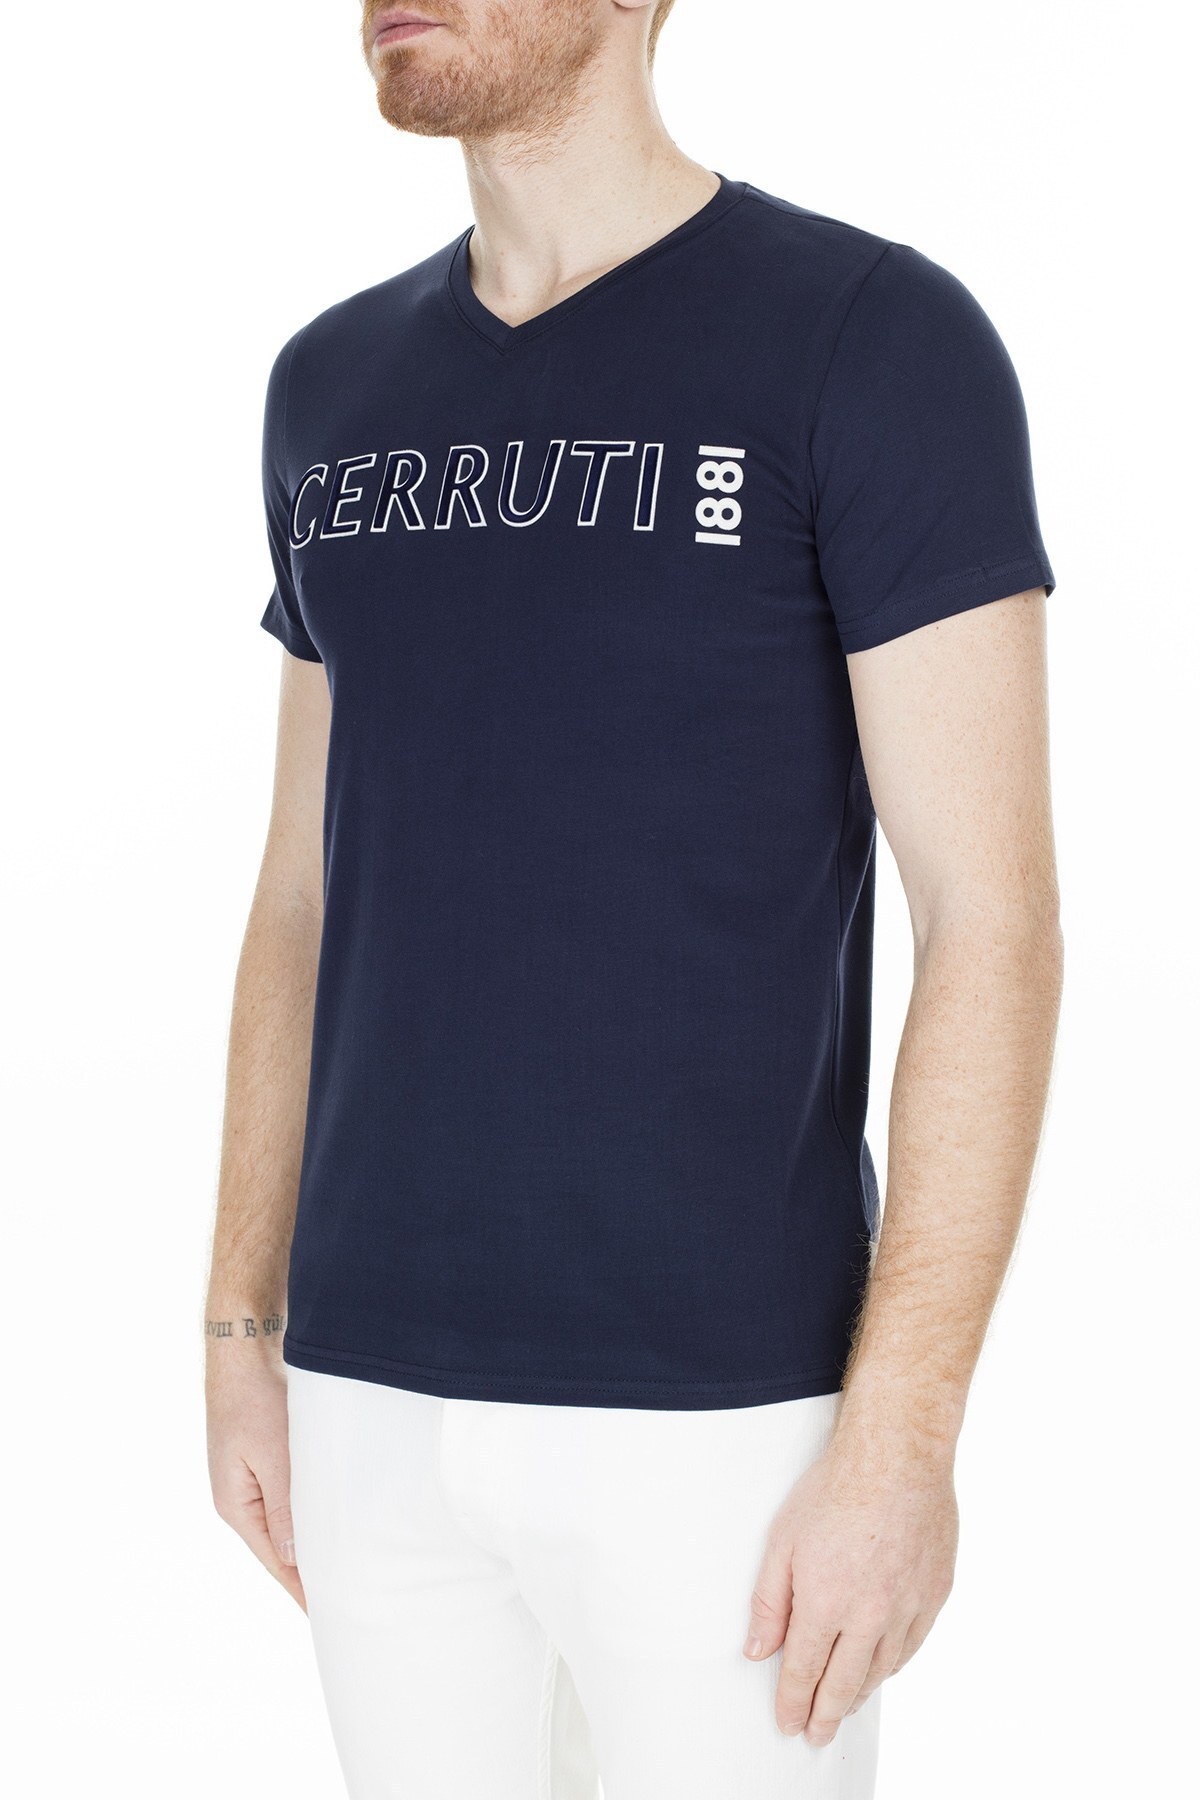 Cerruti 1881 Erkek T Shirt 203-001645 LACİVERT